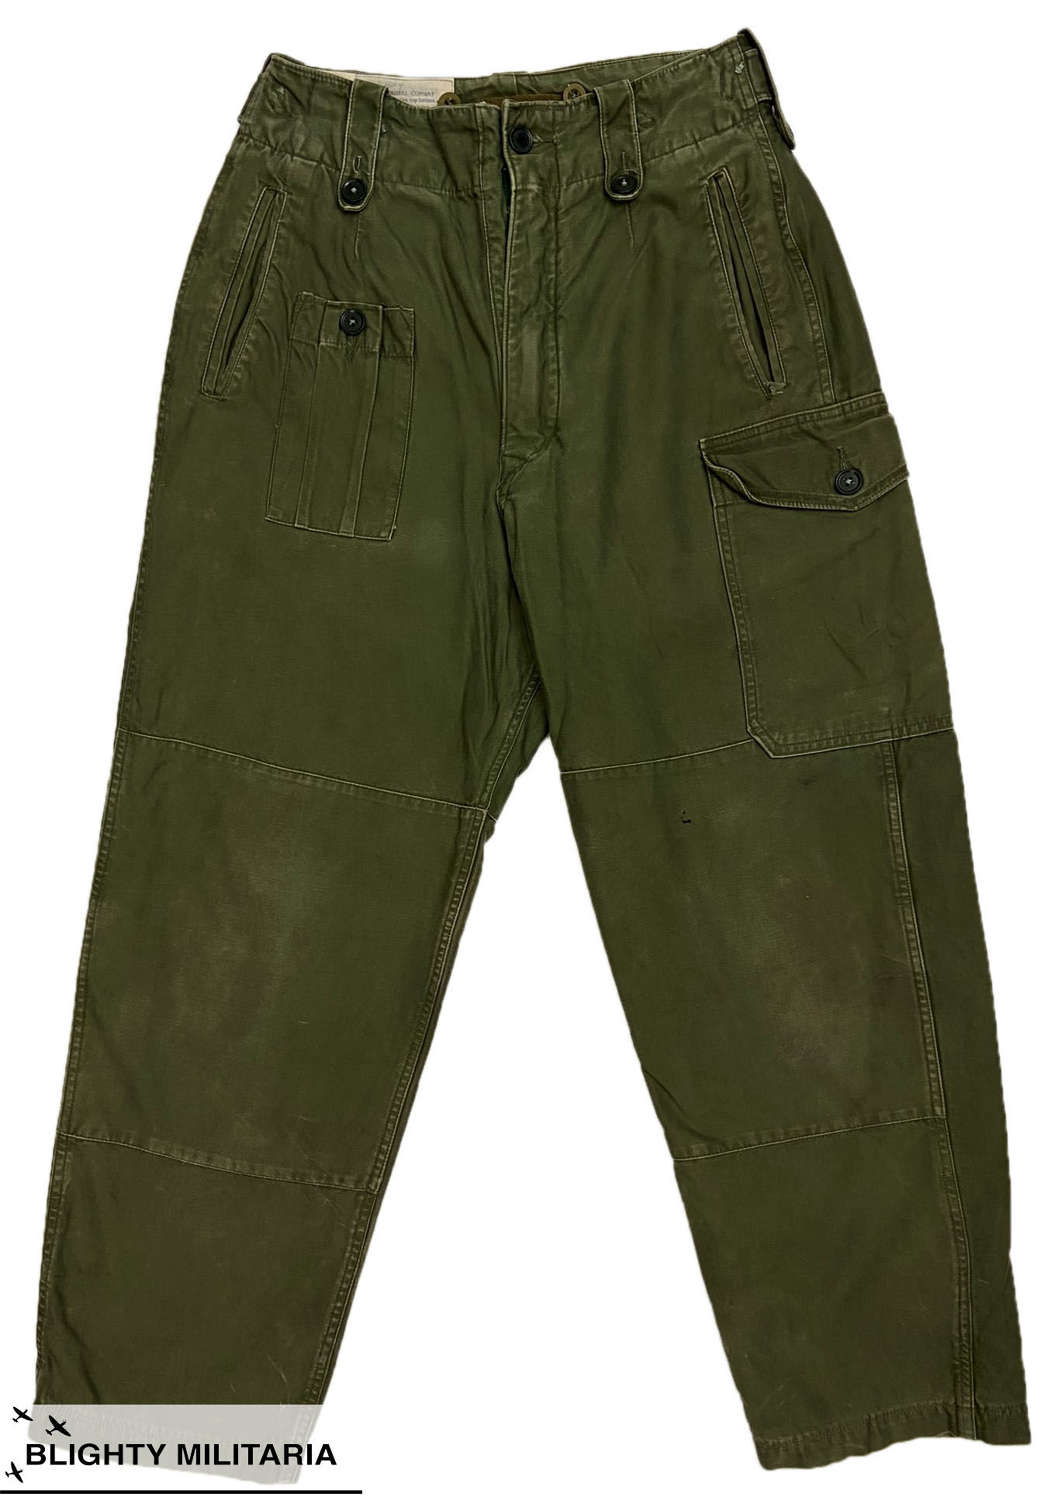 Original 1960 Pattern Combat Trousers - Size 1